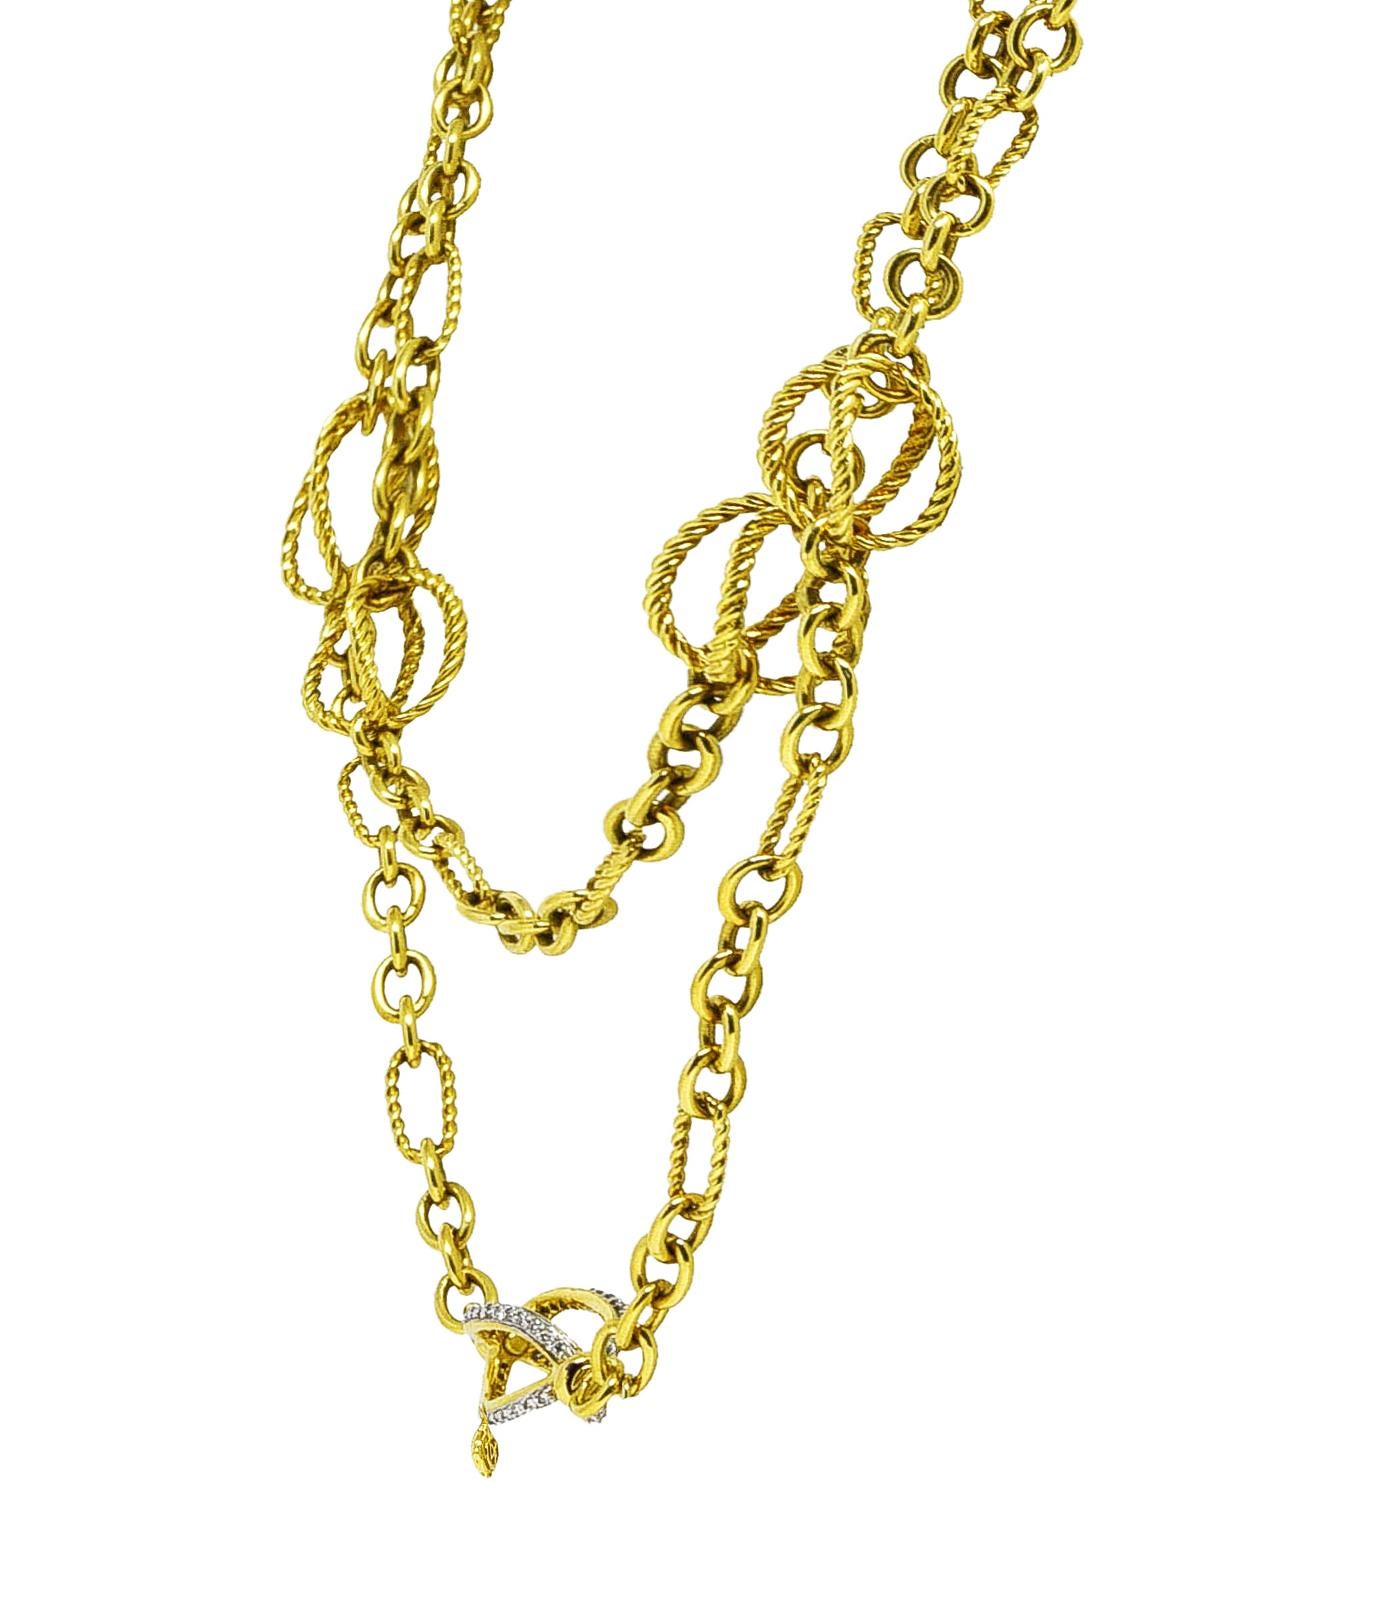 Brilliant Cut David Yurman Diamond 18 Karat Yellow Gold Twisted Cable Lantana Chain Necklace